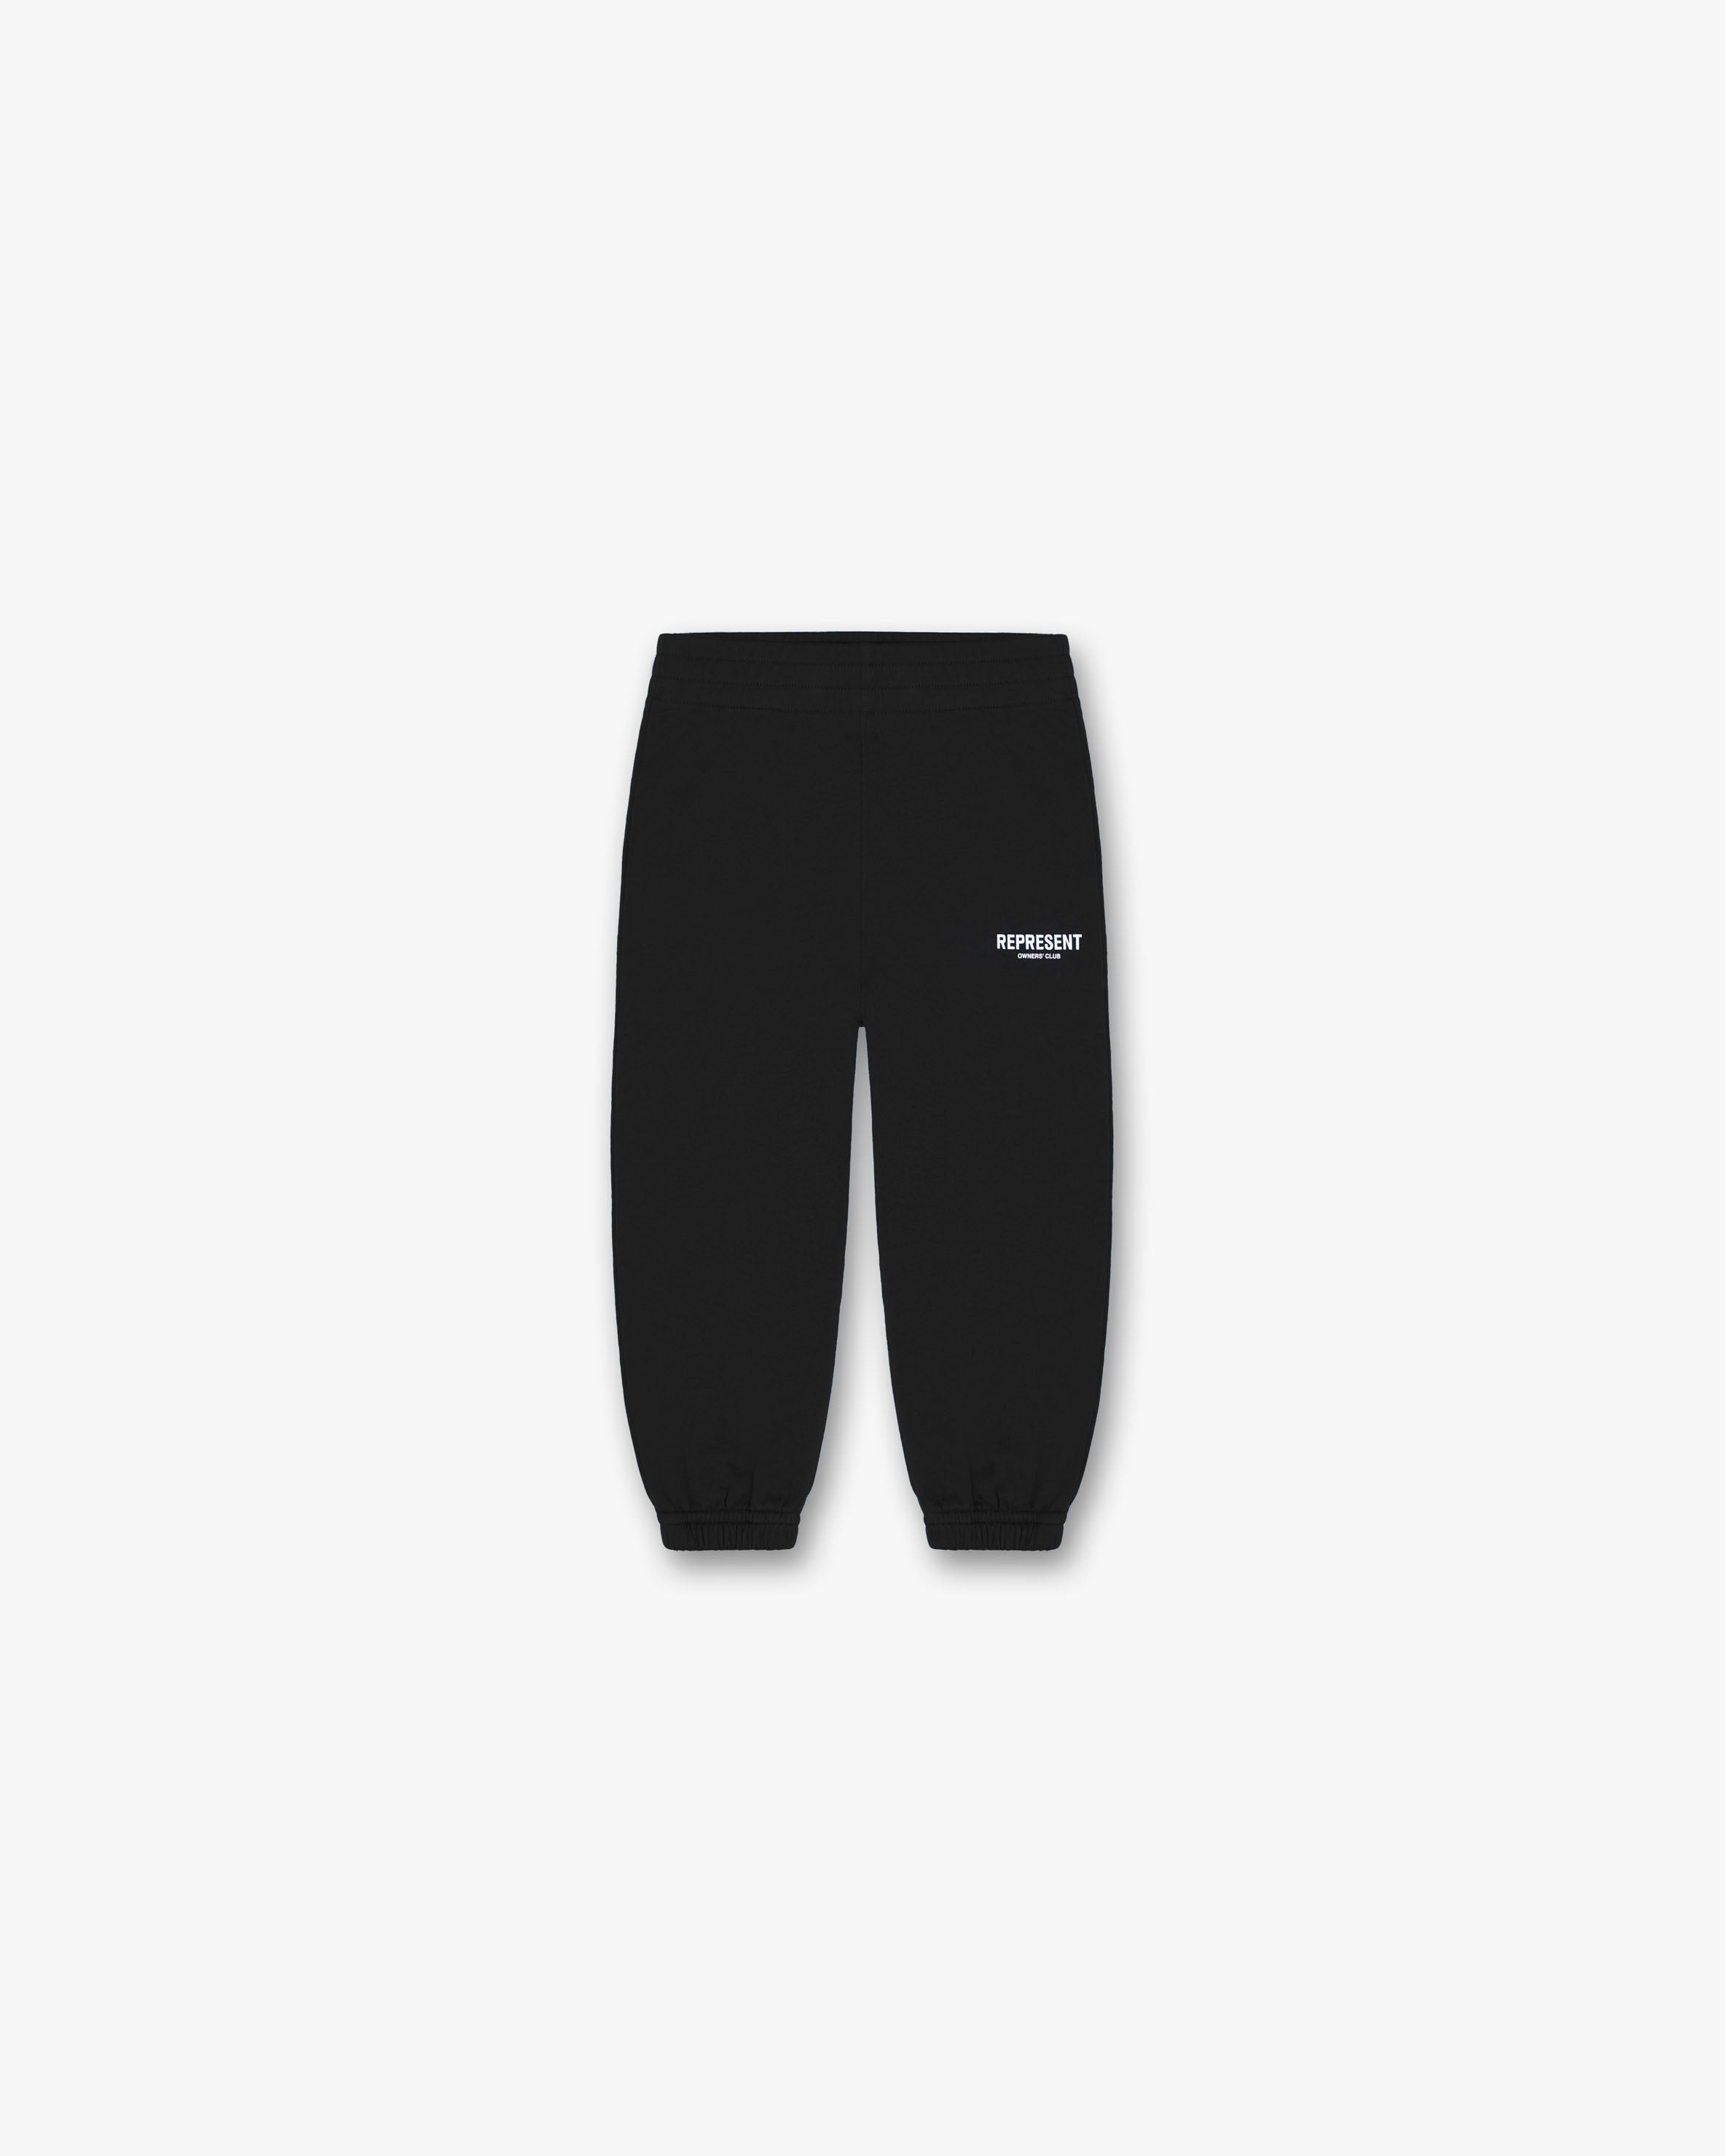 Represent Mini Owners Club Sweatpants - Black